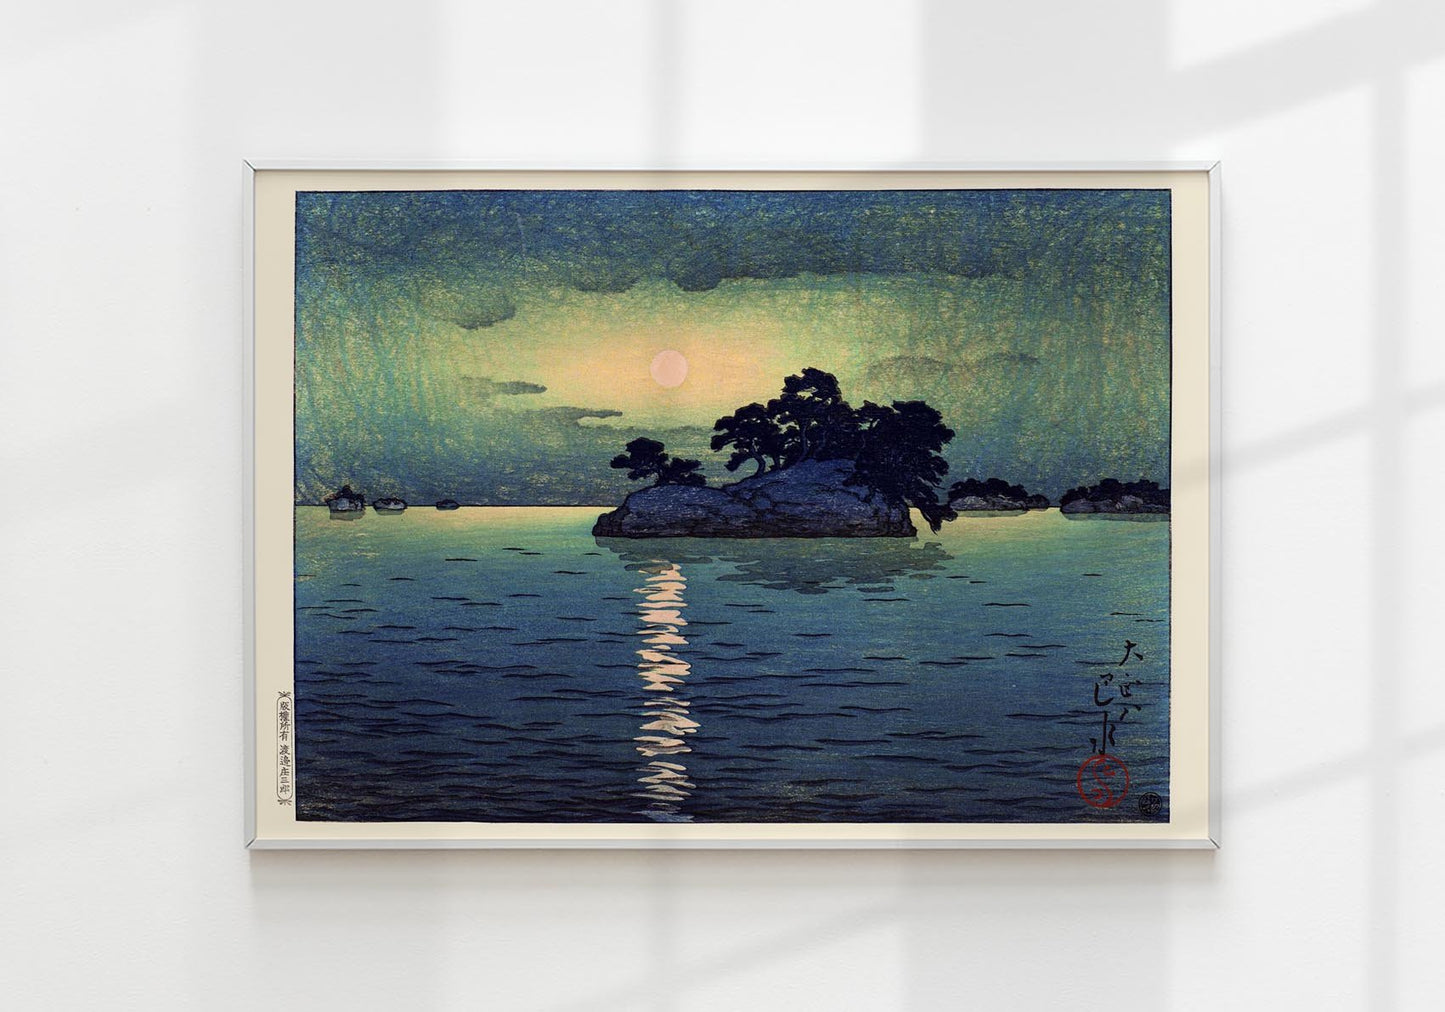 Matsushima in Moonlight by Hasui